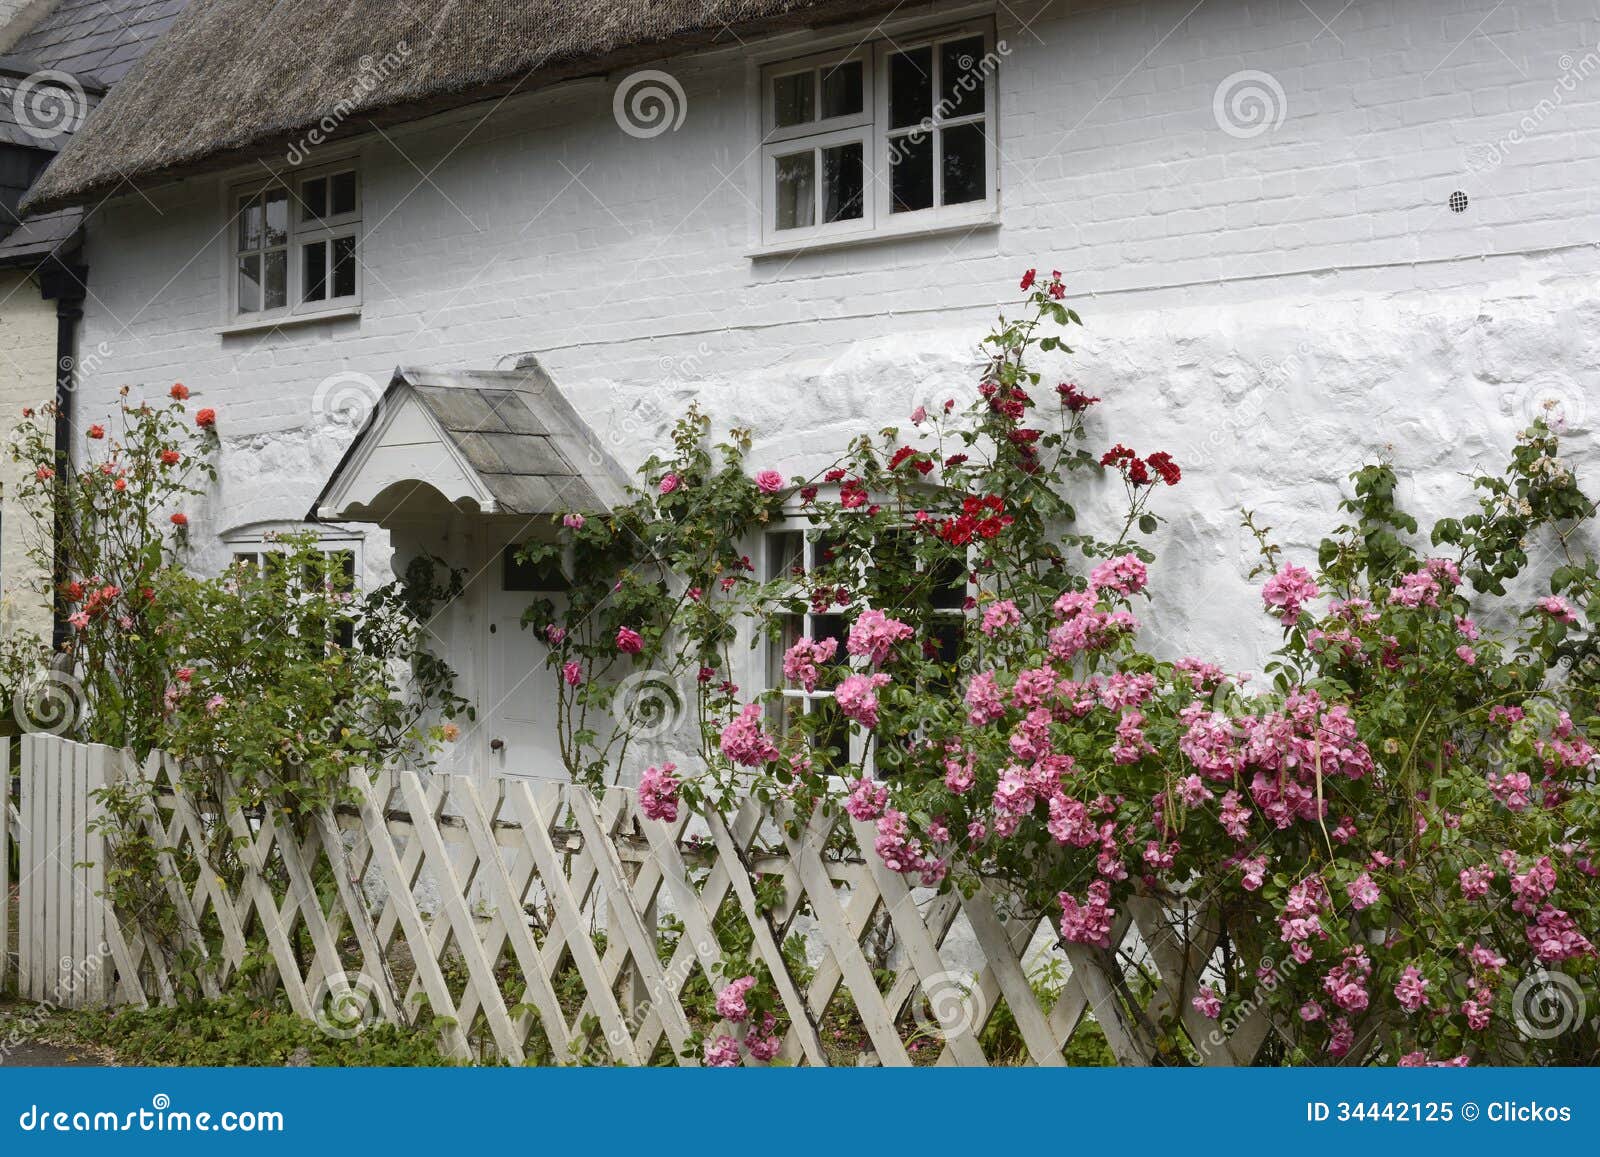 English Country Cottage Avebury England By Clickos Via Dreamstime English Country Cottage Country Cottage Cottage